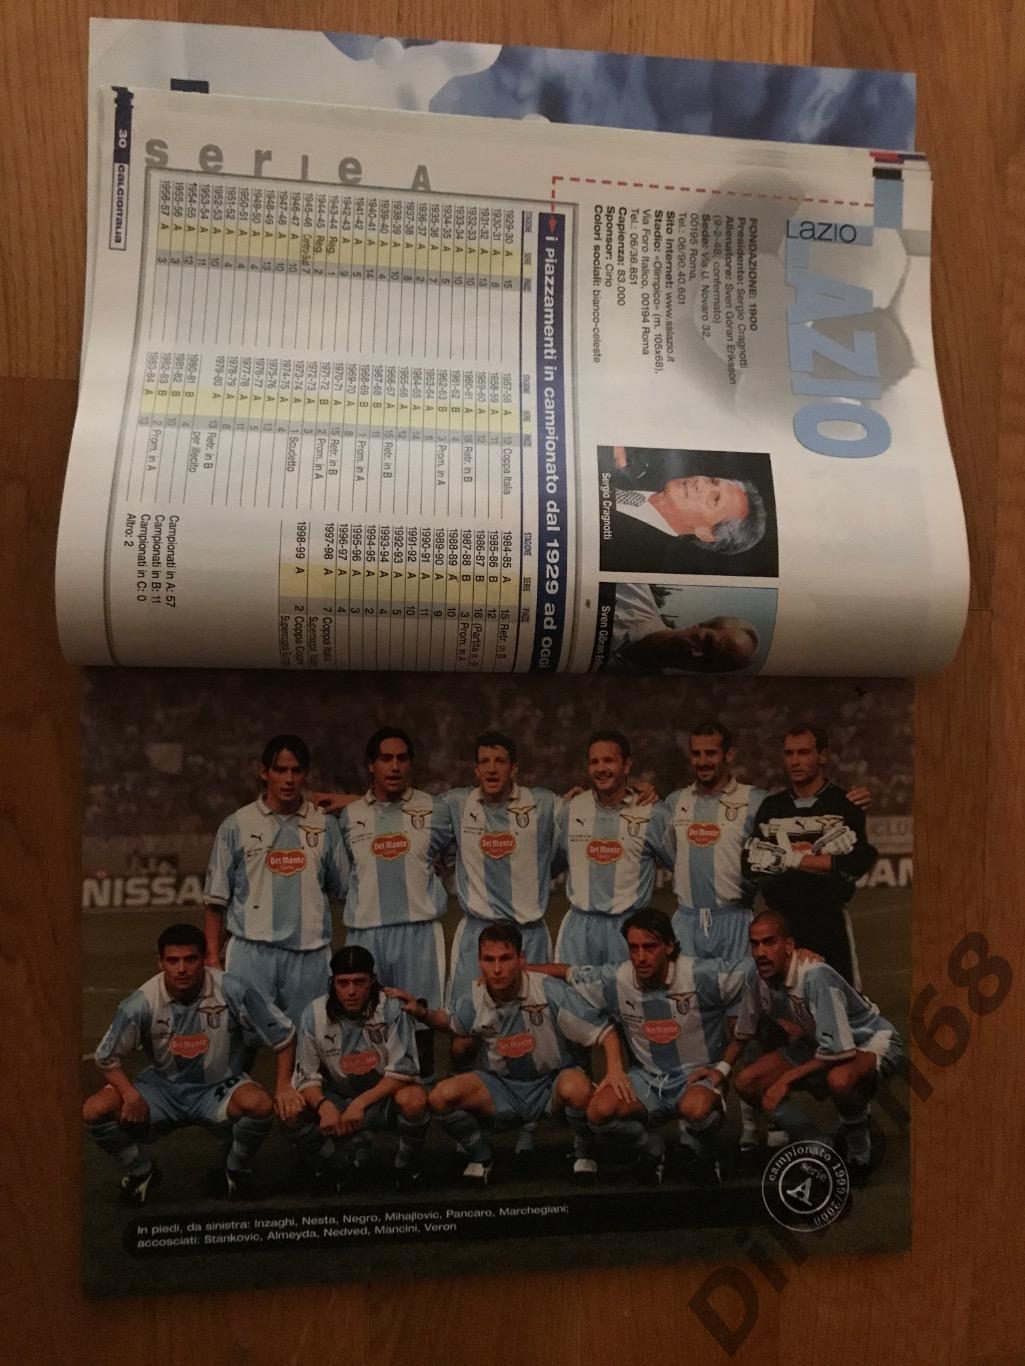 Calcioitalia guerin sportivo 99/2000г представление команд серии A,B,C1,C2 целый 4